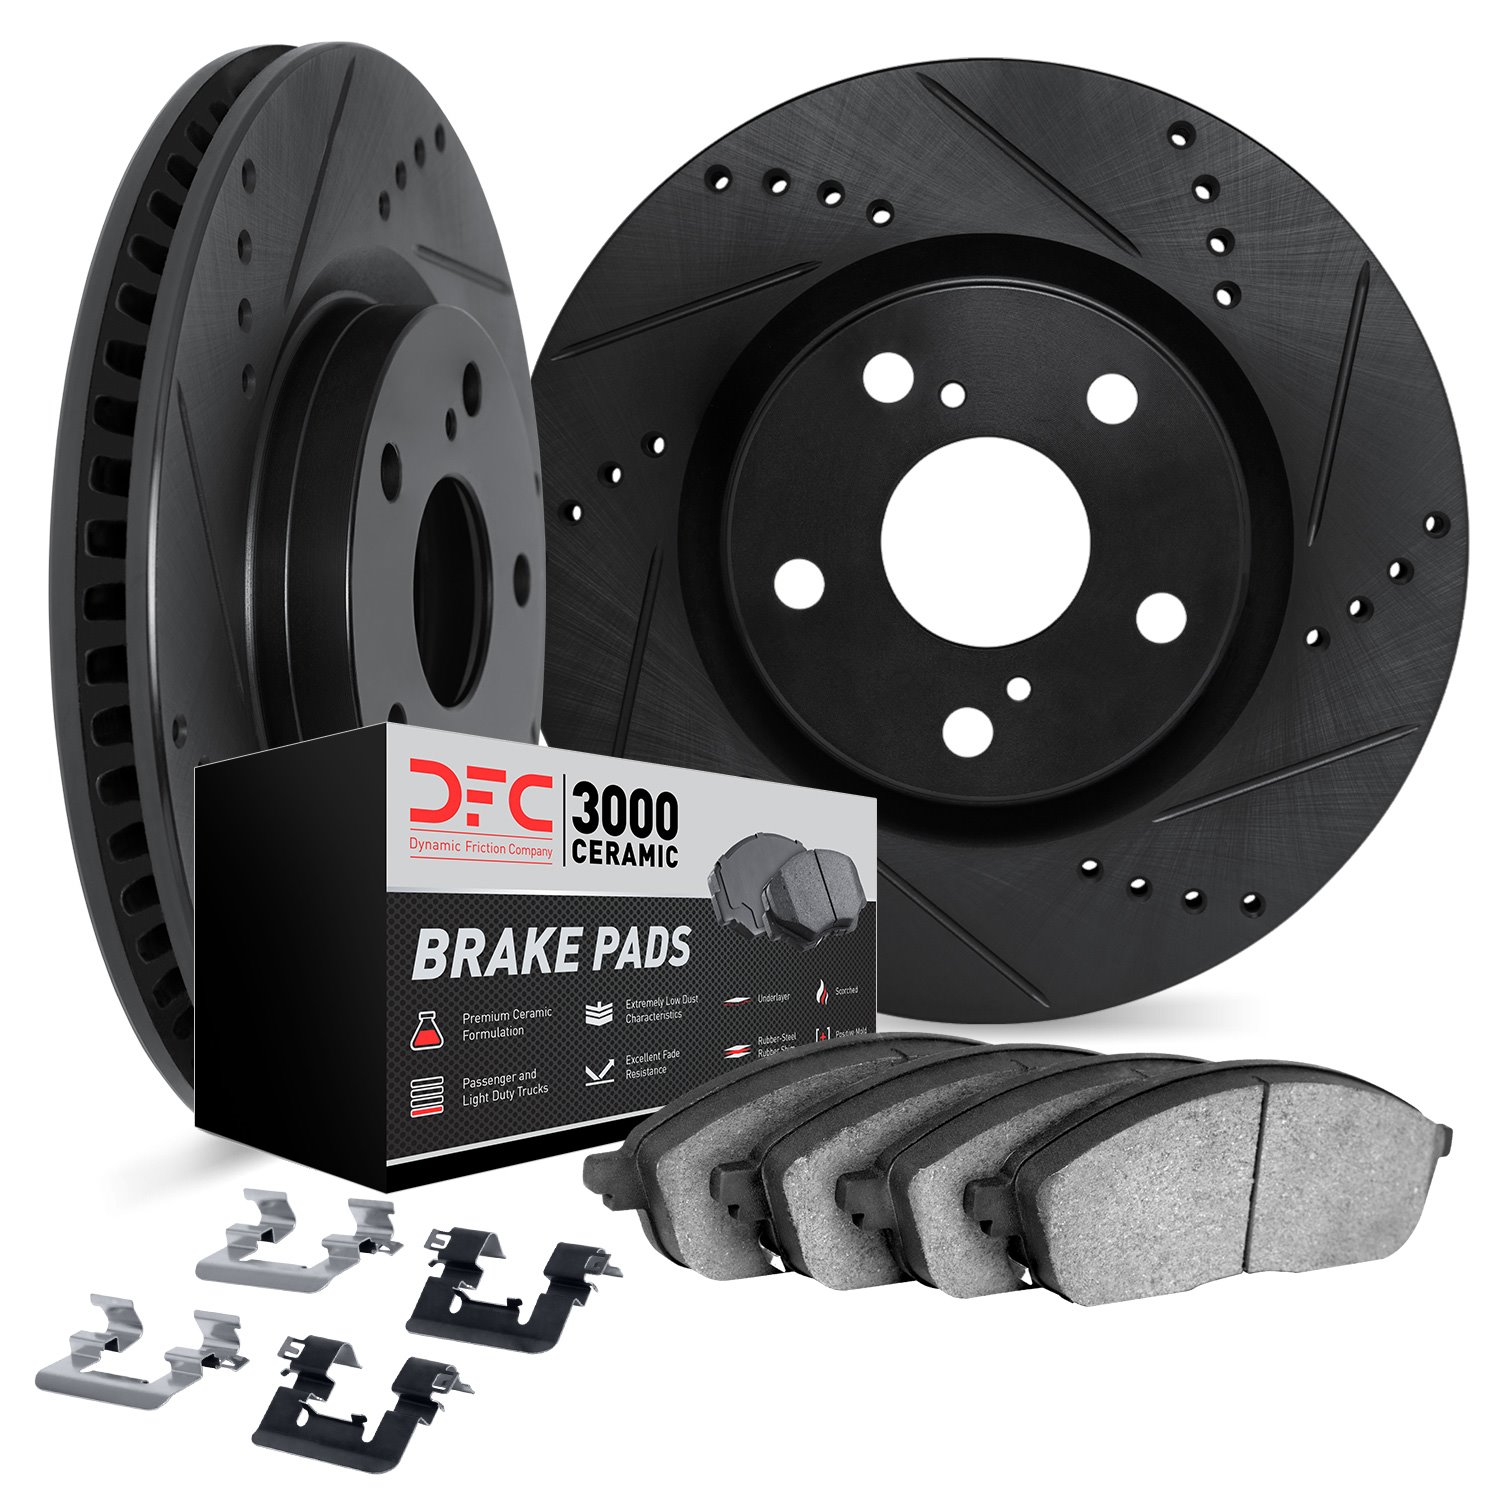 8312-76183 Drilled/Slotted Brake Rotors with 3000-Series Ceramic Brake Pads Kit & Hardware [Black], Fits Select Lexus/Toyota/Sci